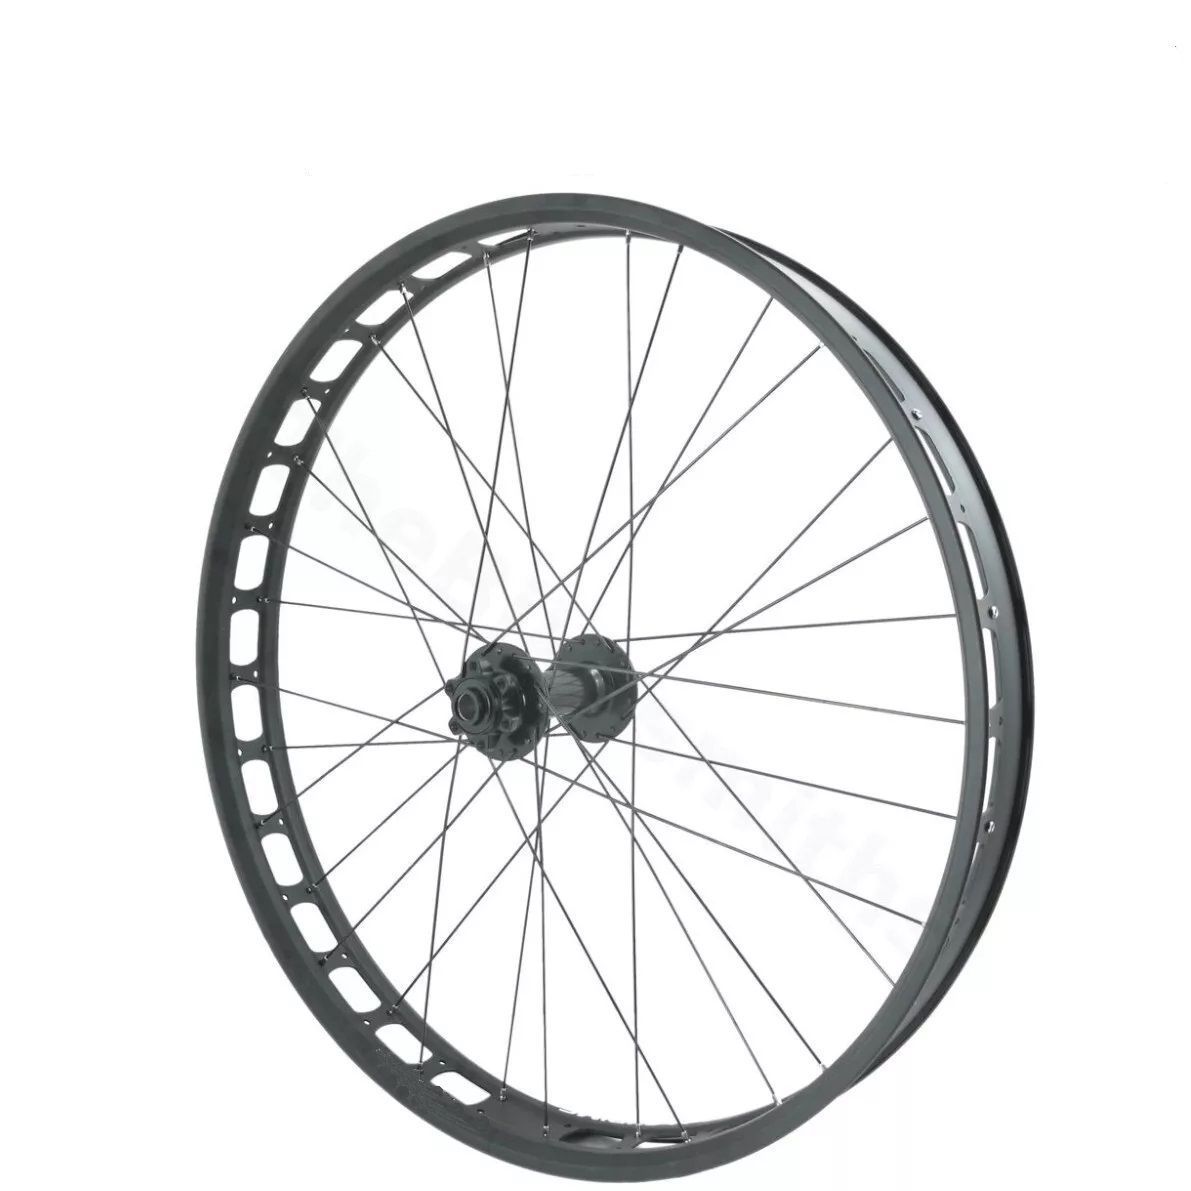 Alex Blizzerk 70 FRONT 15x150mm Fat Bike Wheel Tubeless Ready - The Bikesmiths